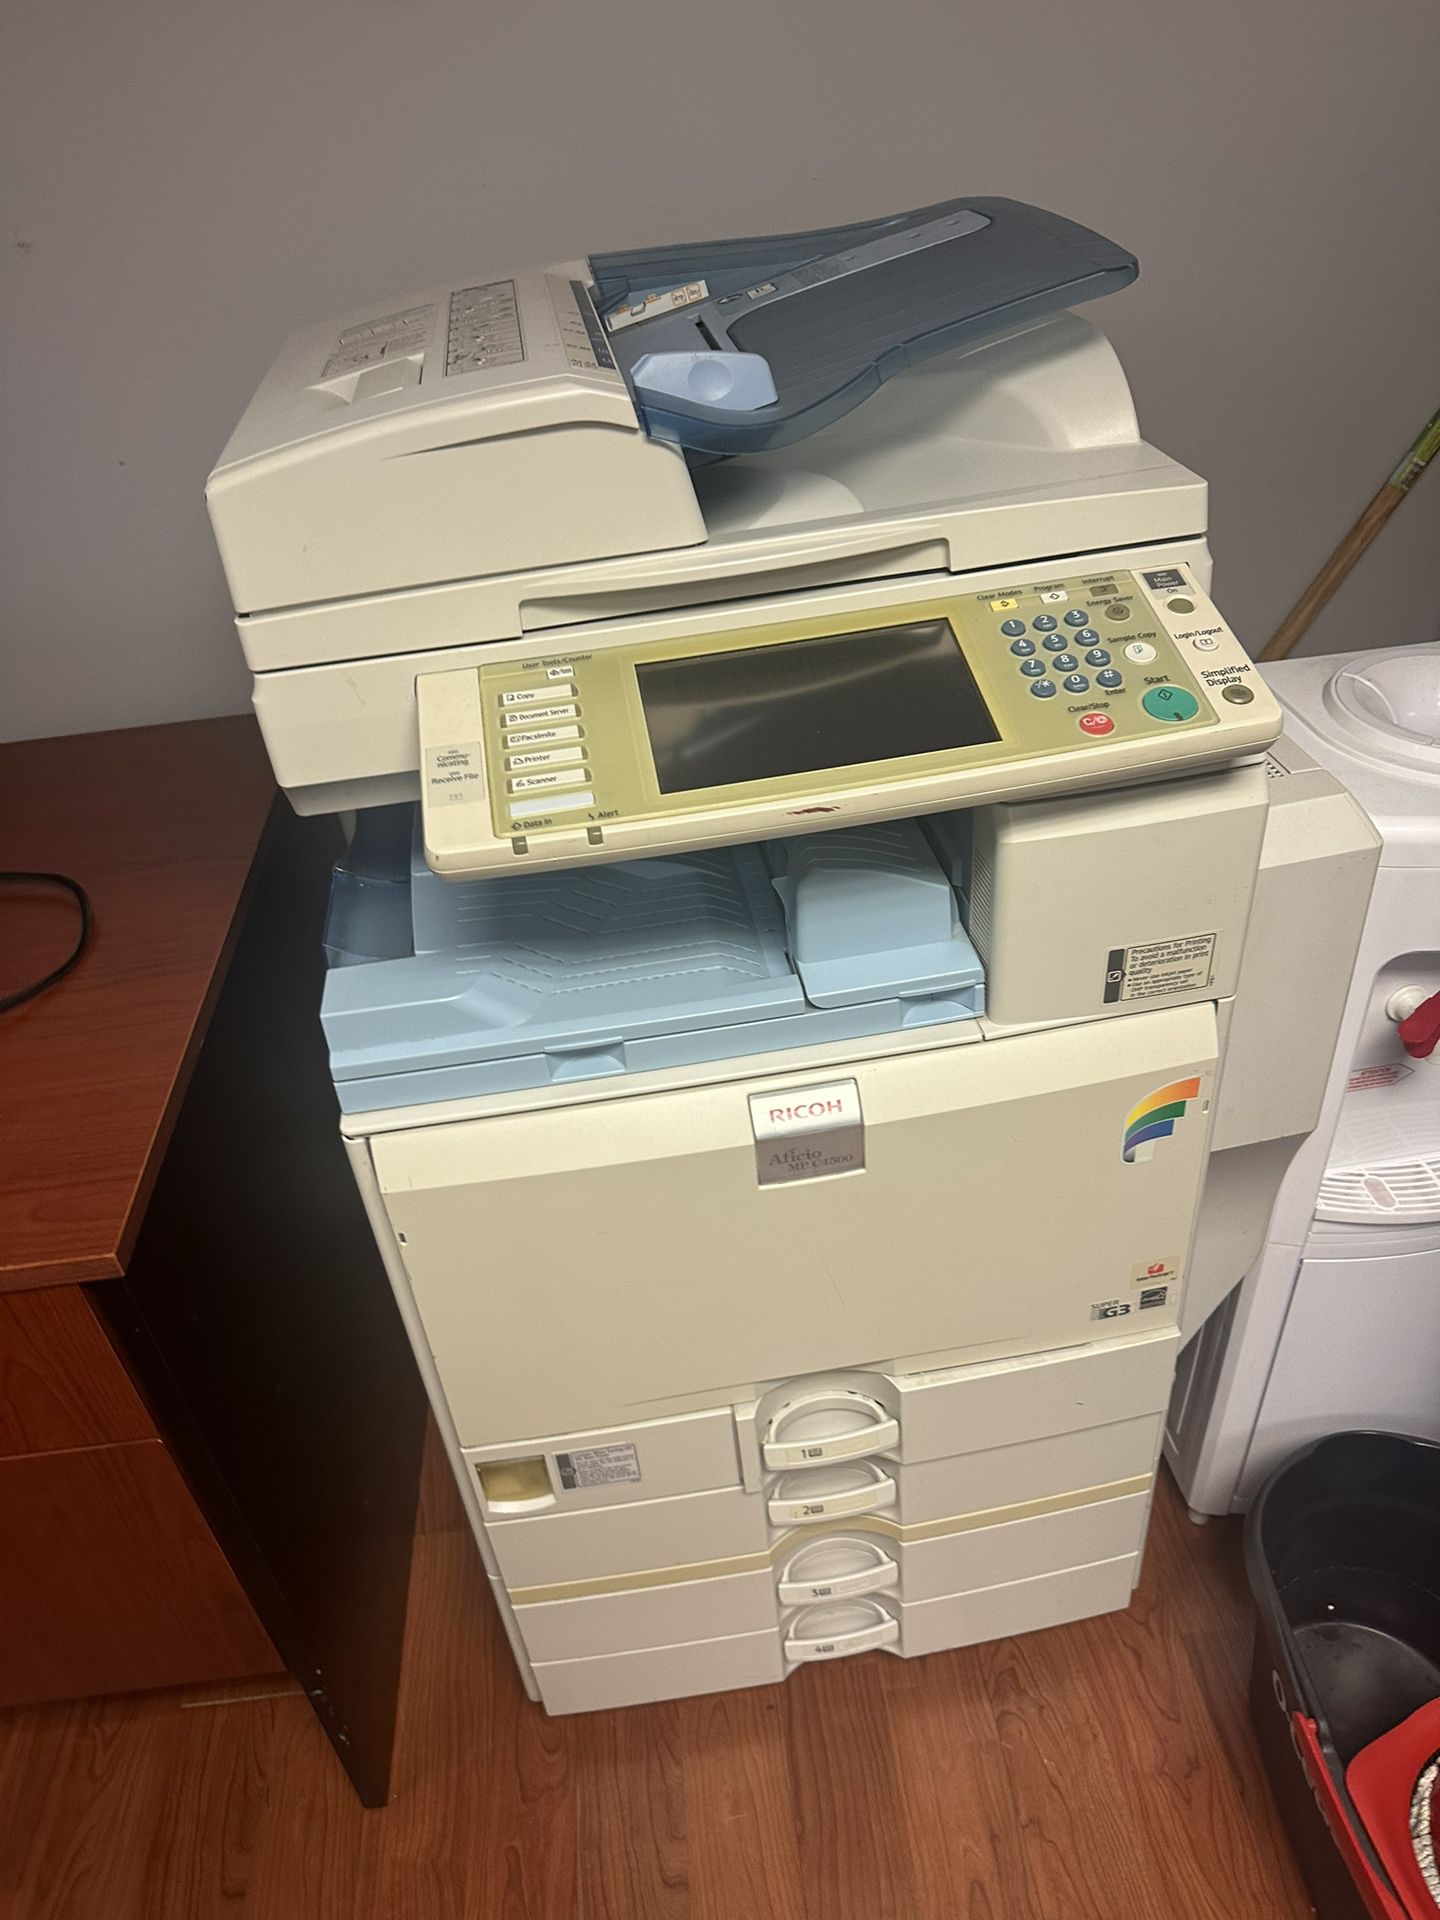 Office Printer Small Printer Large Printer $120 For All 3 